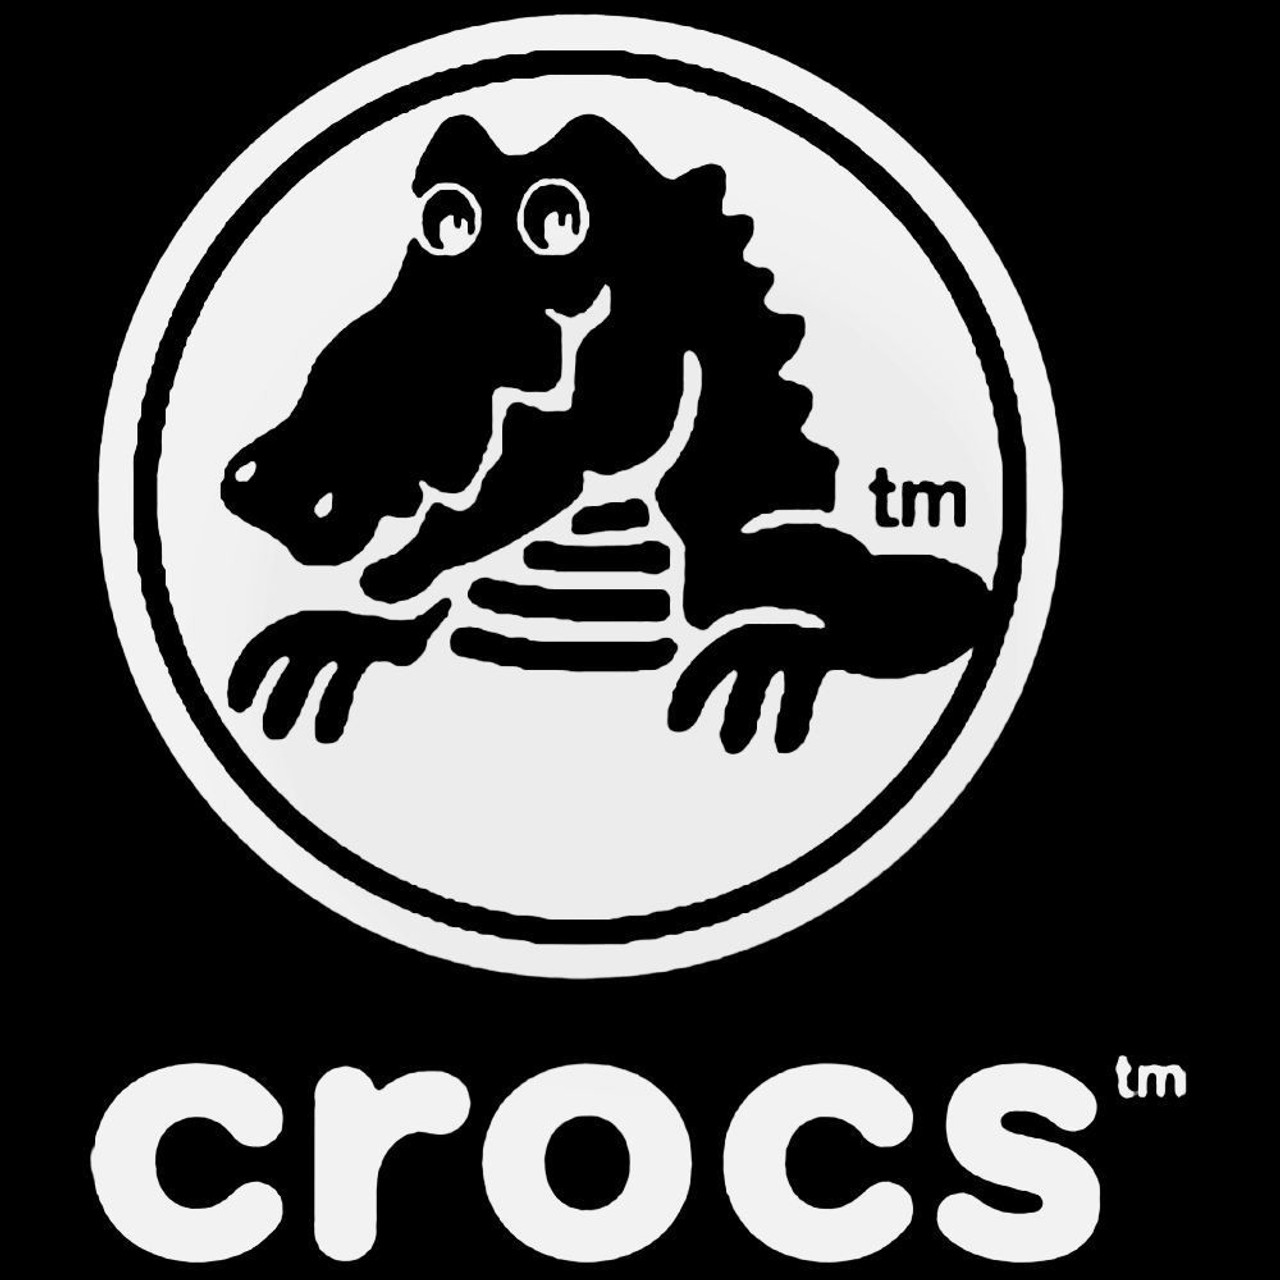 Crocs Shoes Logo Decal Sticker